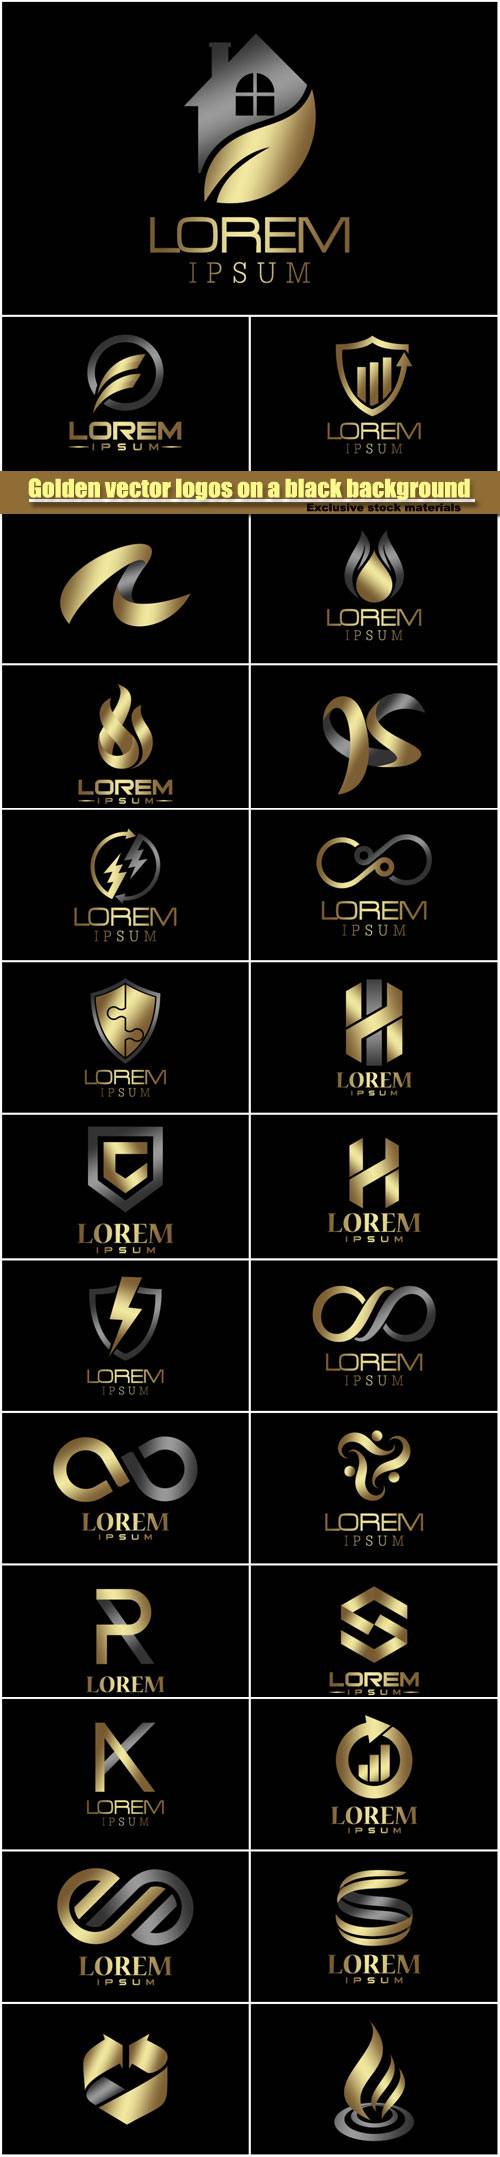 Golden vector logos on a black background